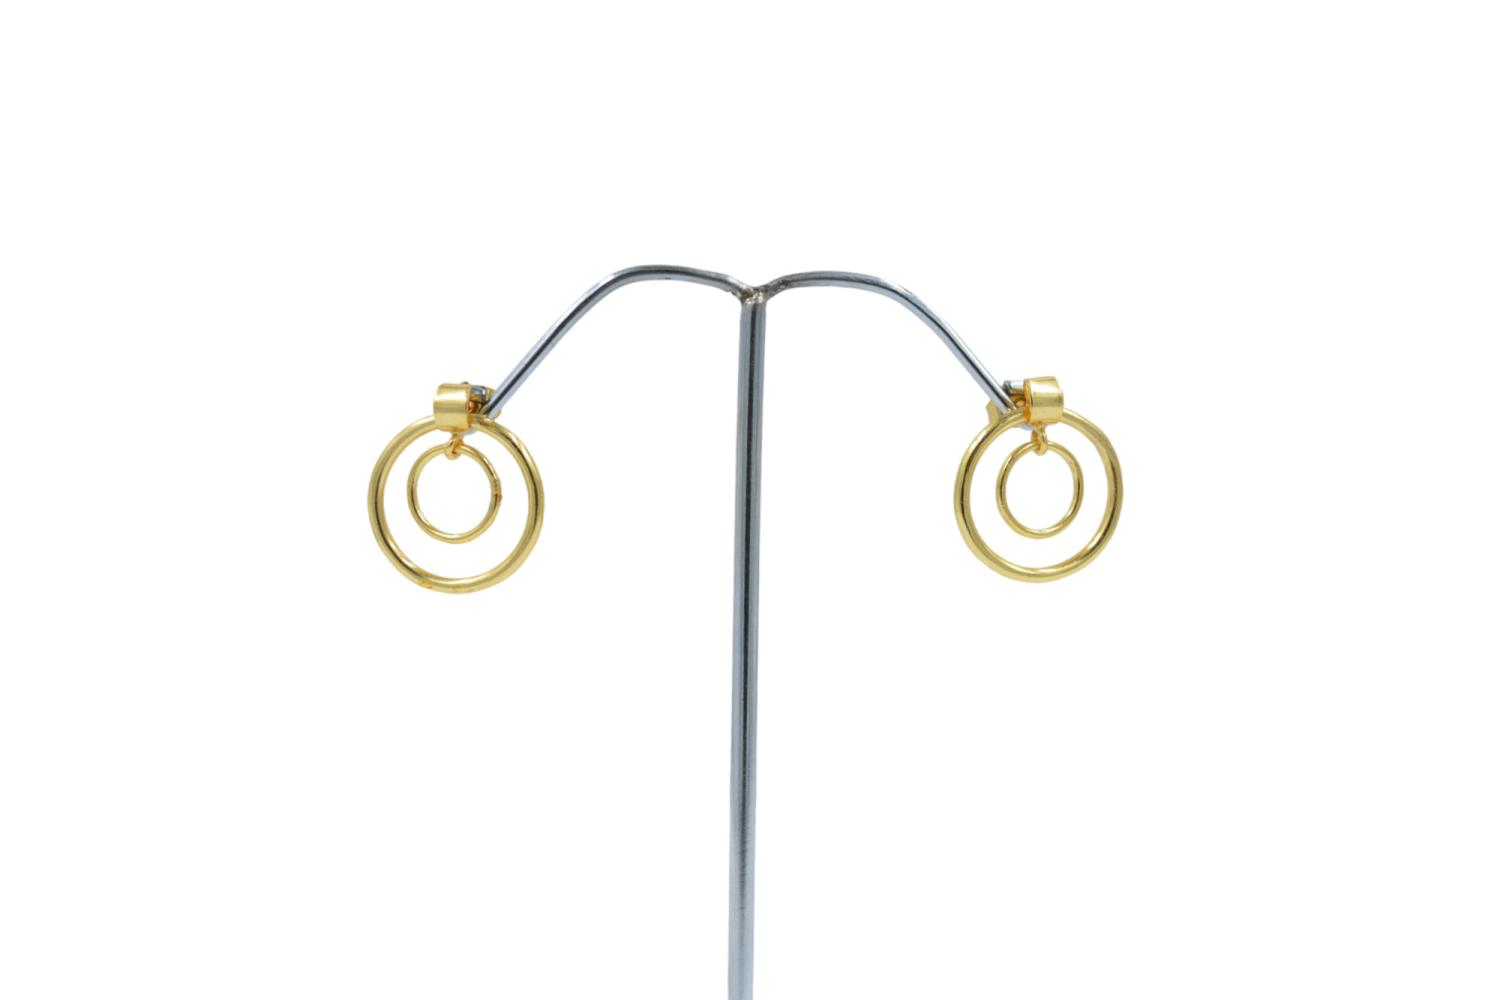 promotion Handmade Jewelry Gold Plated Ear Stud Fashion 24k Gold Plated Wholesale Dubai brass Stud Earrings Je